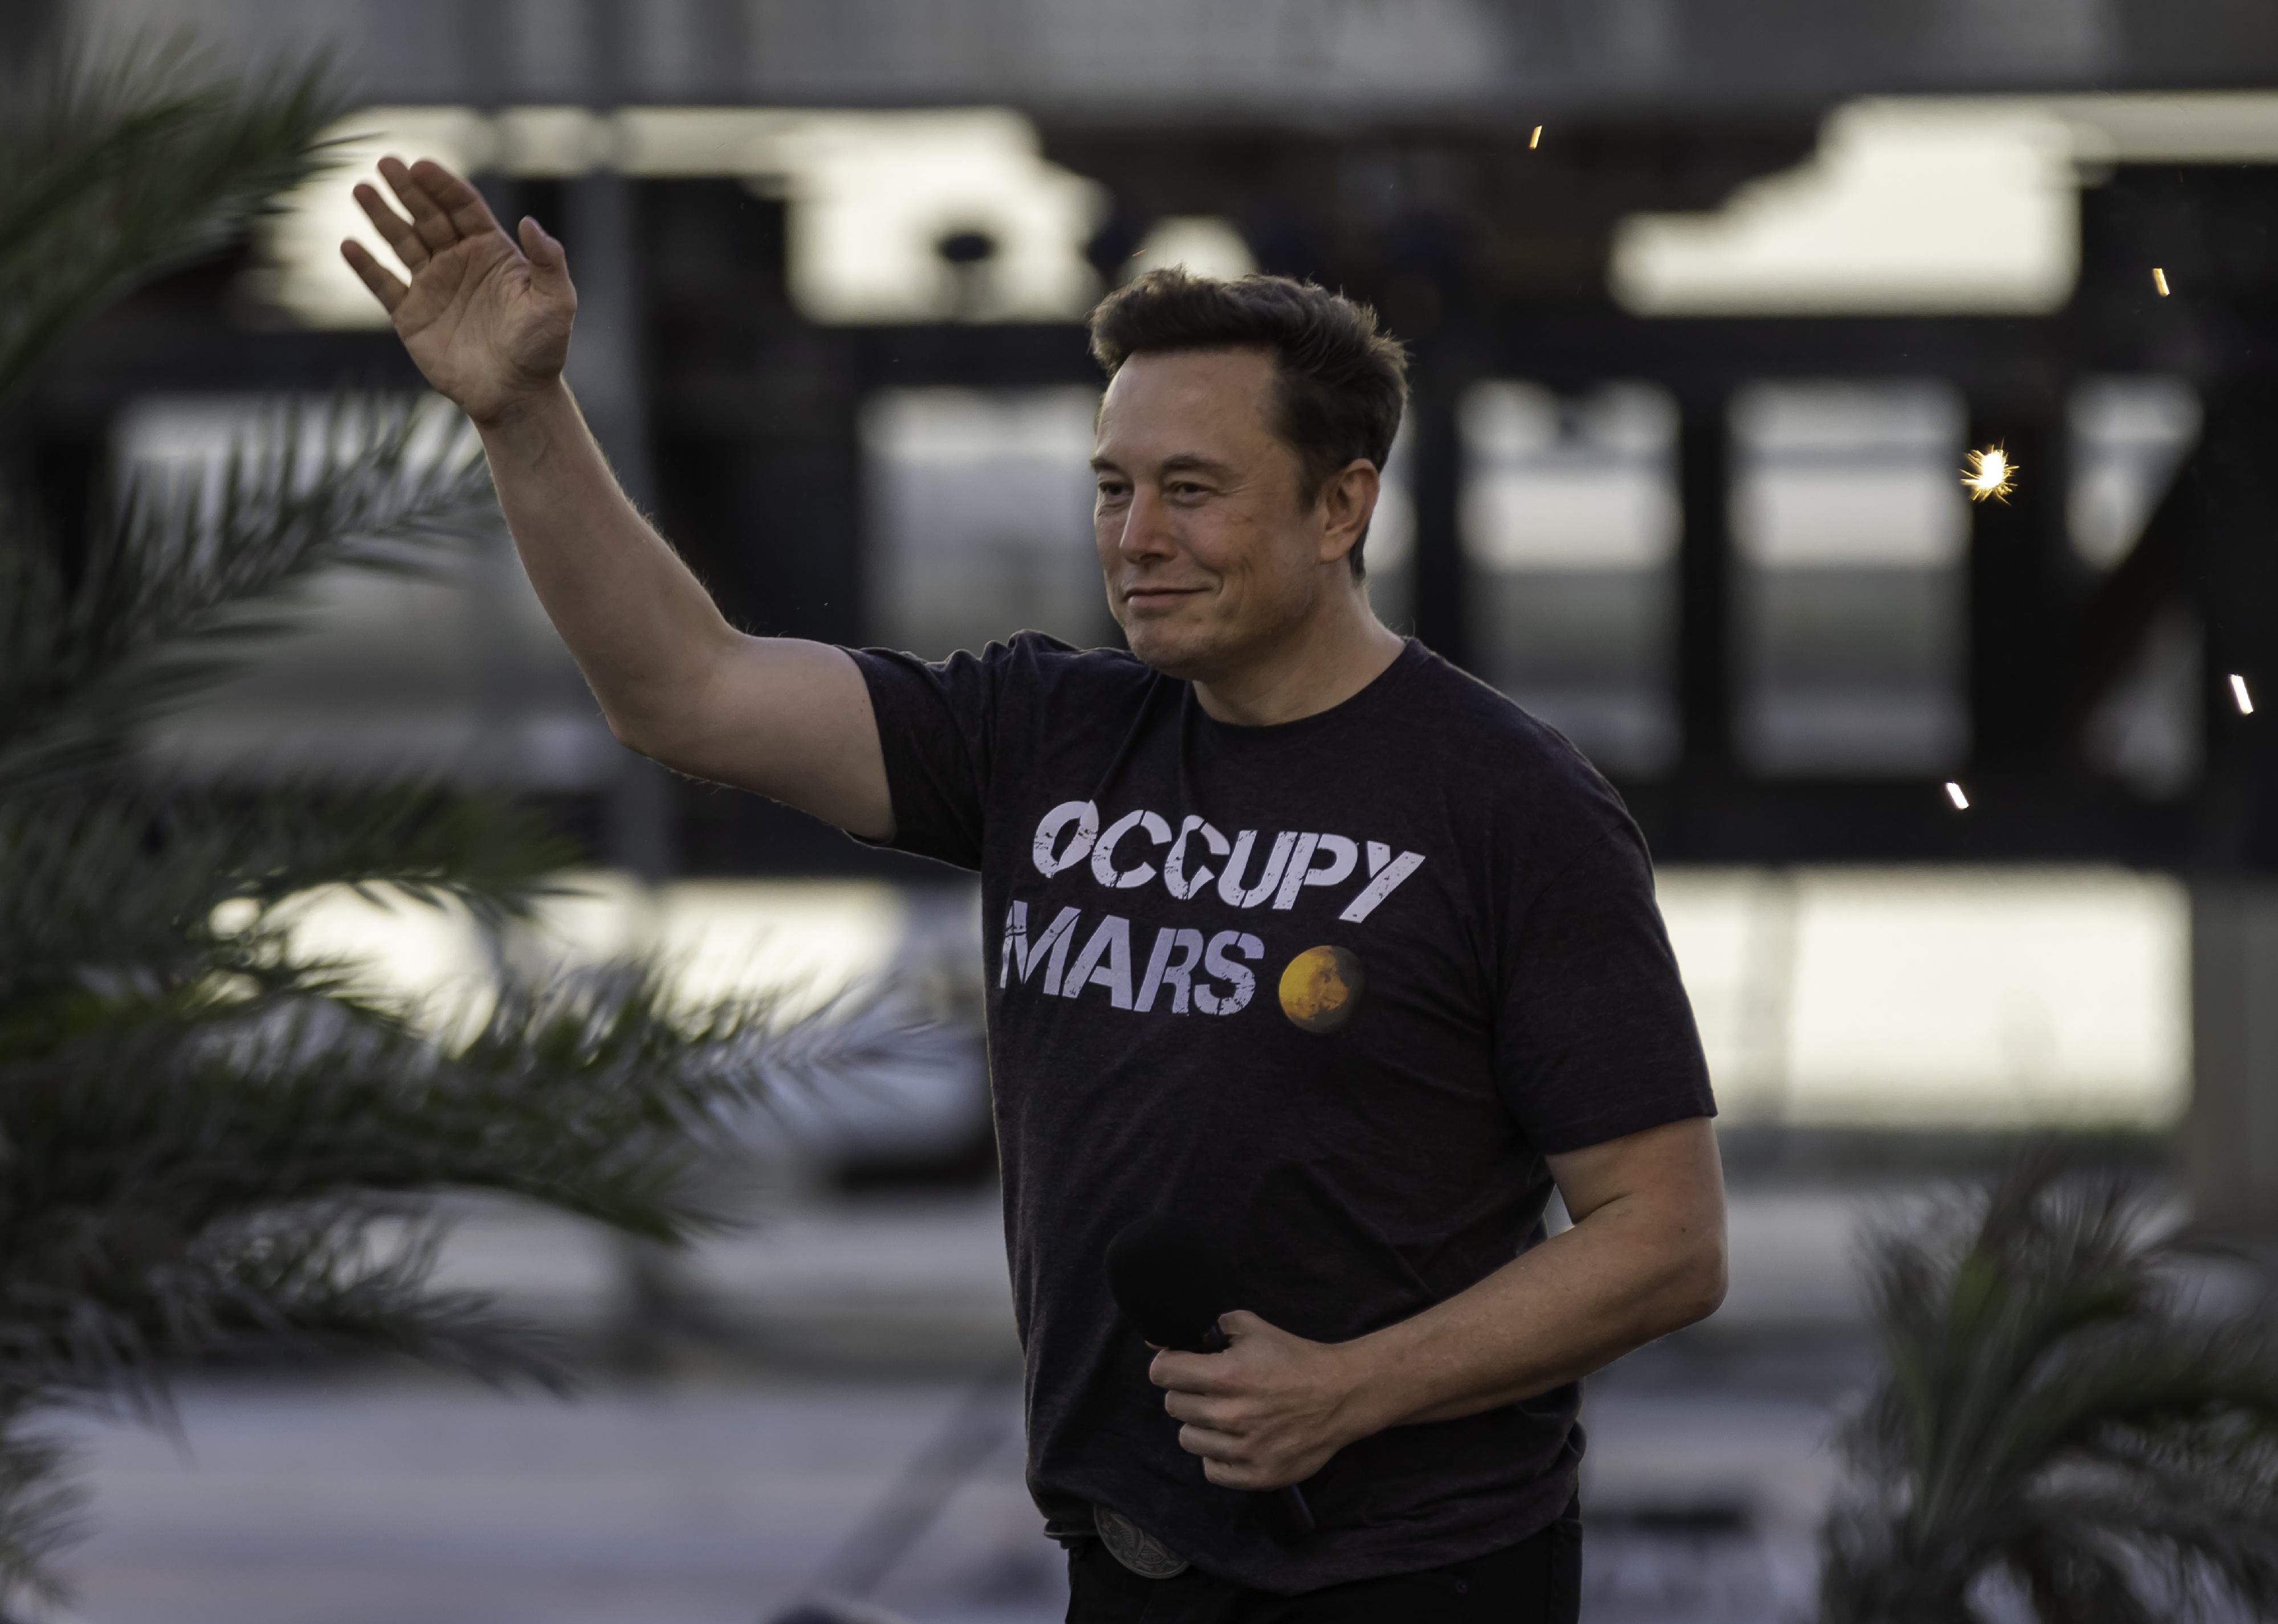 Elon Musk wearing an Occupy Mars t-shirt and waving.